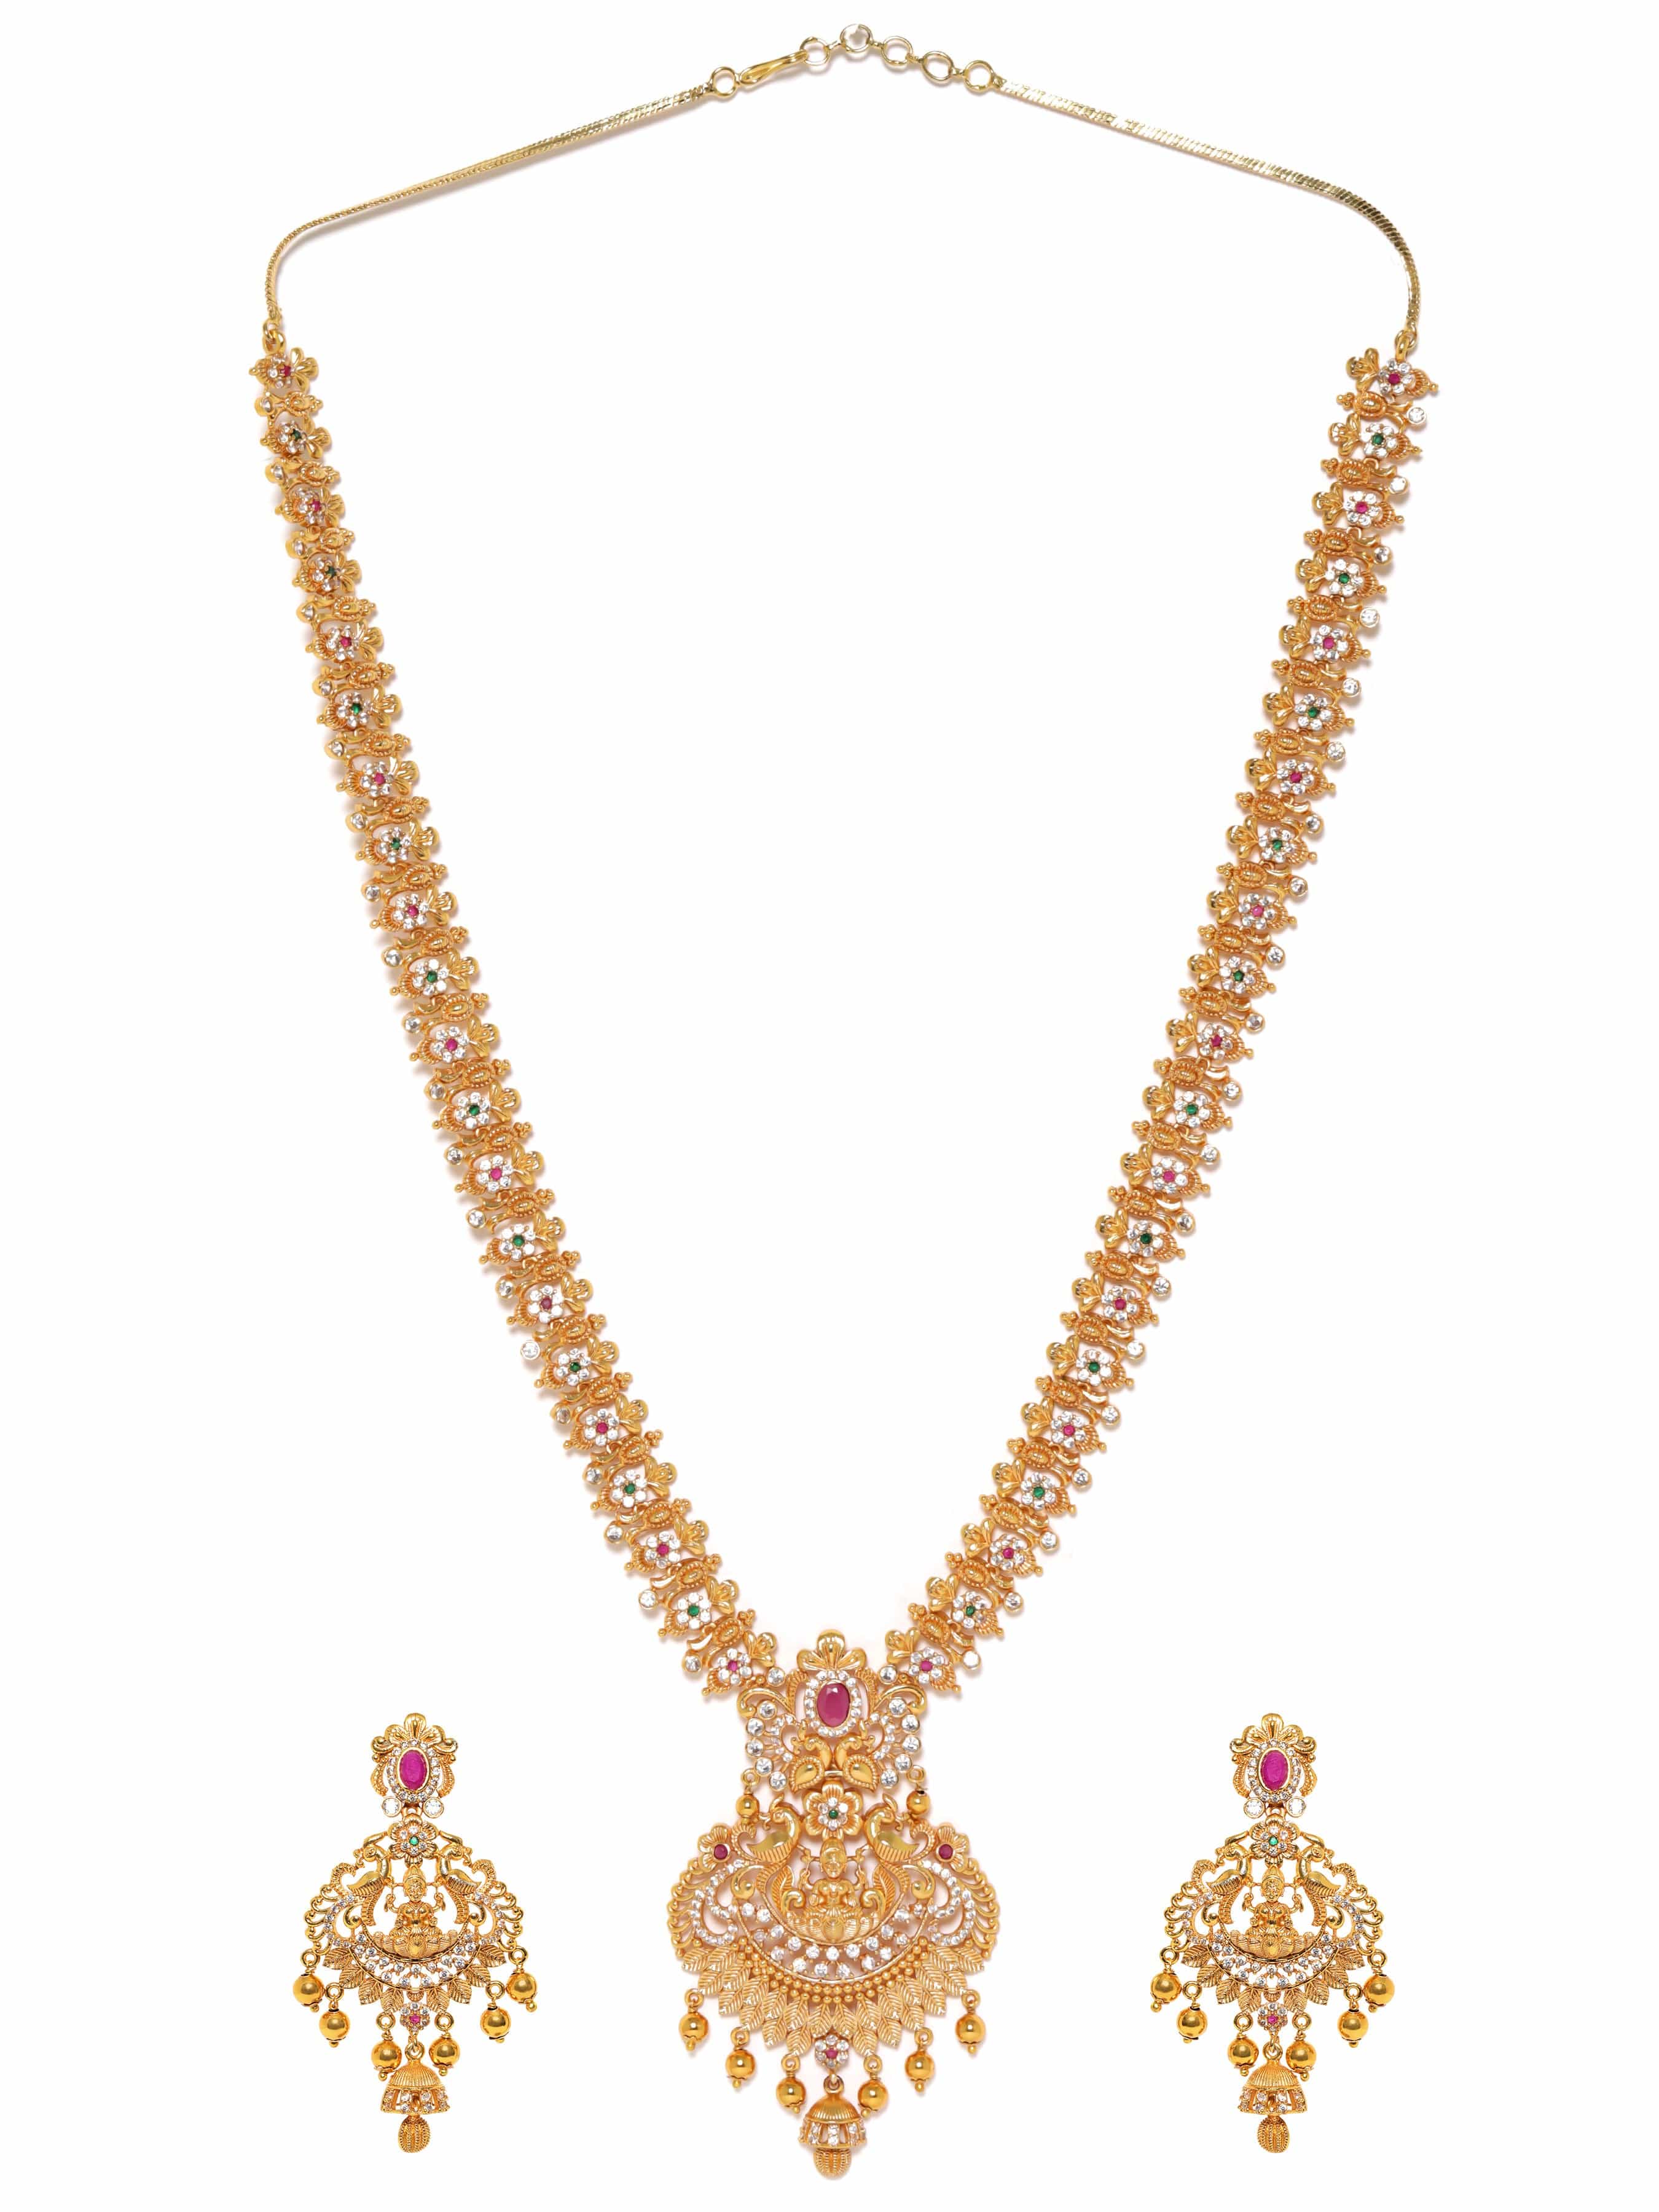 22K Gold Plated Designer Indian Wedding 11'' Long Necklace Earrings Tikka  set n | eBay